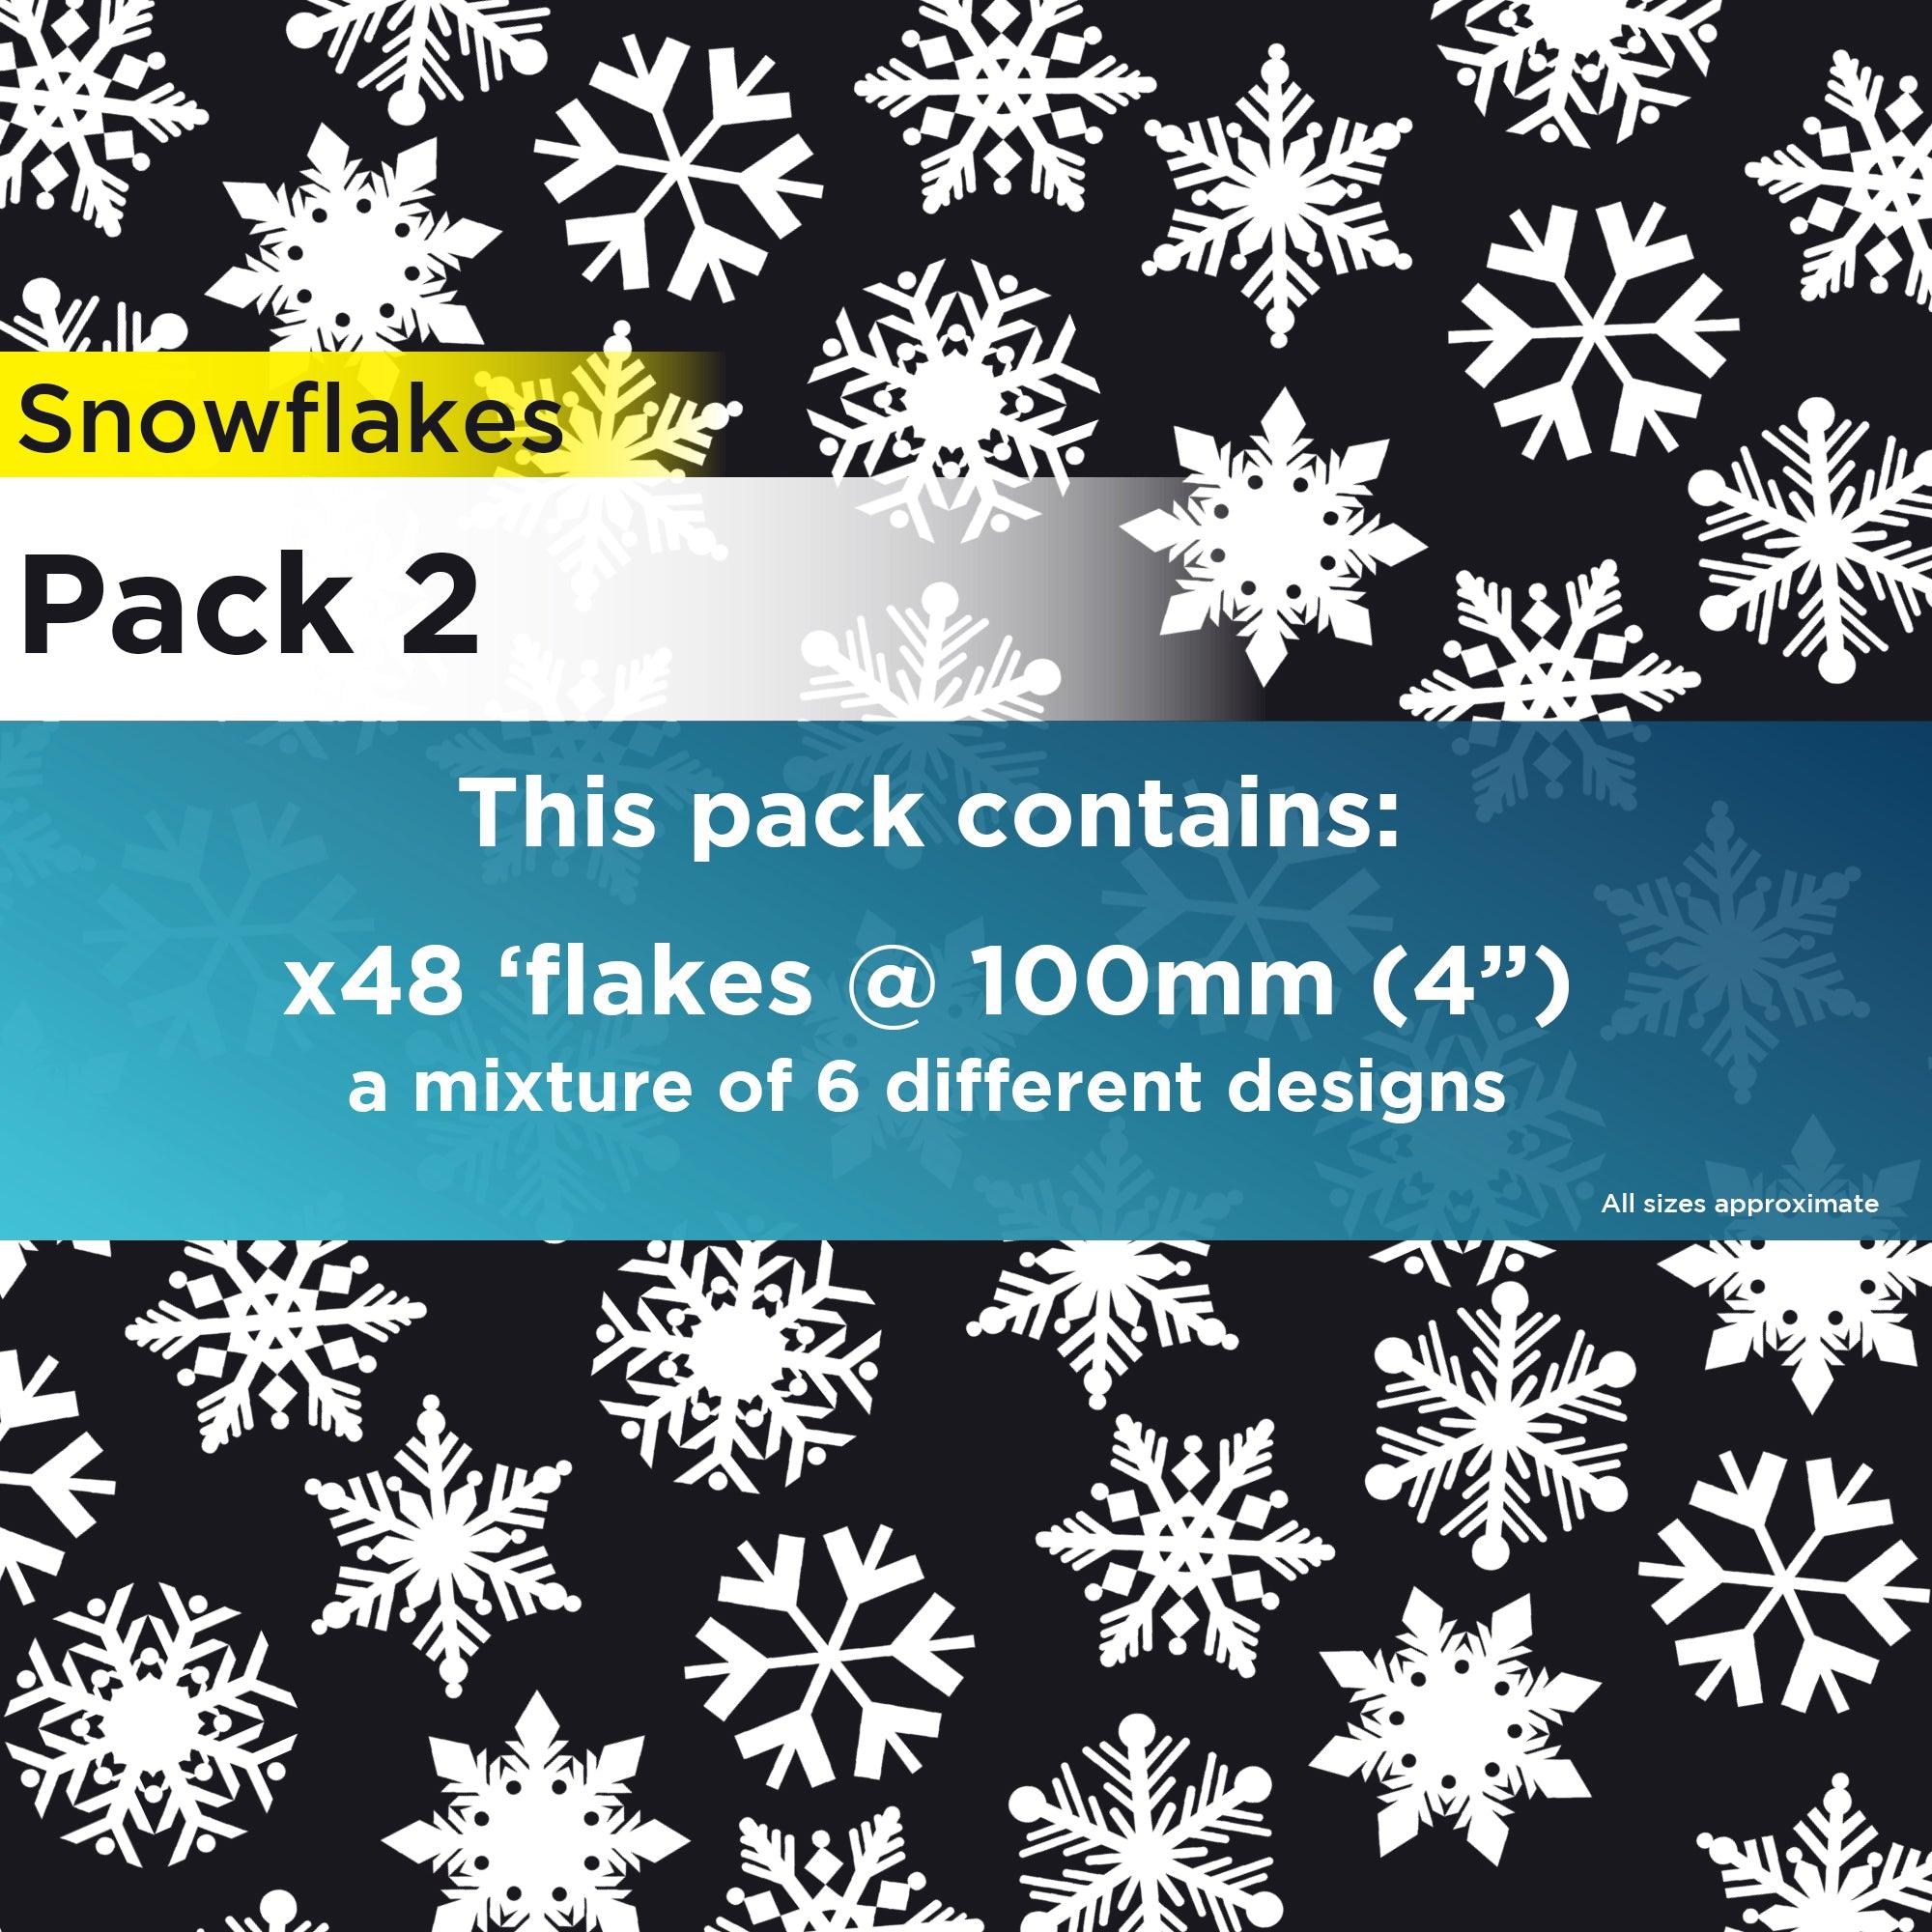 Snowflake Window Stickers: Pack 2 (48 snowflakes @ approx 100mm diameter) Christmas Window Display